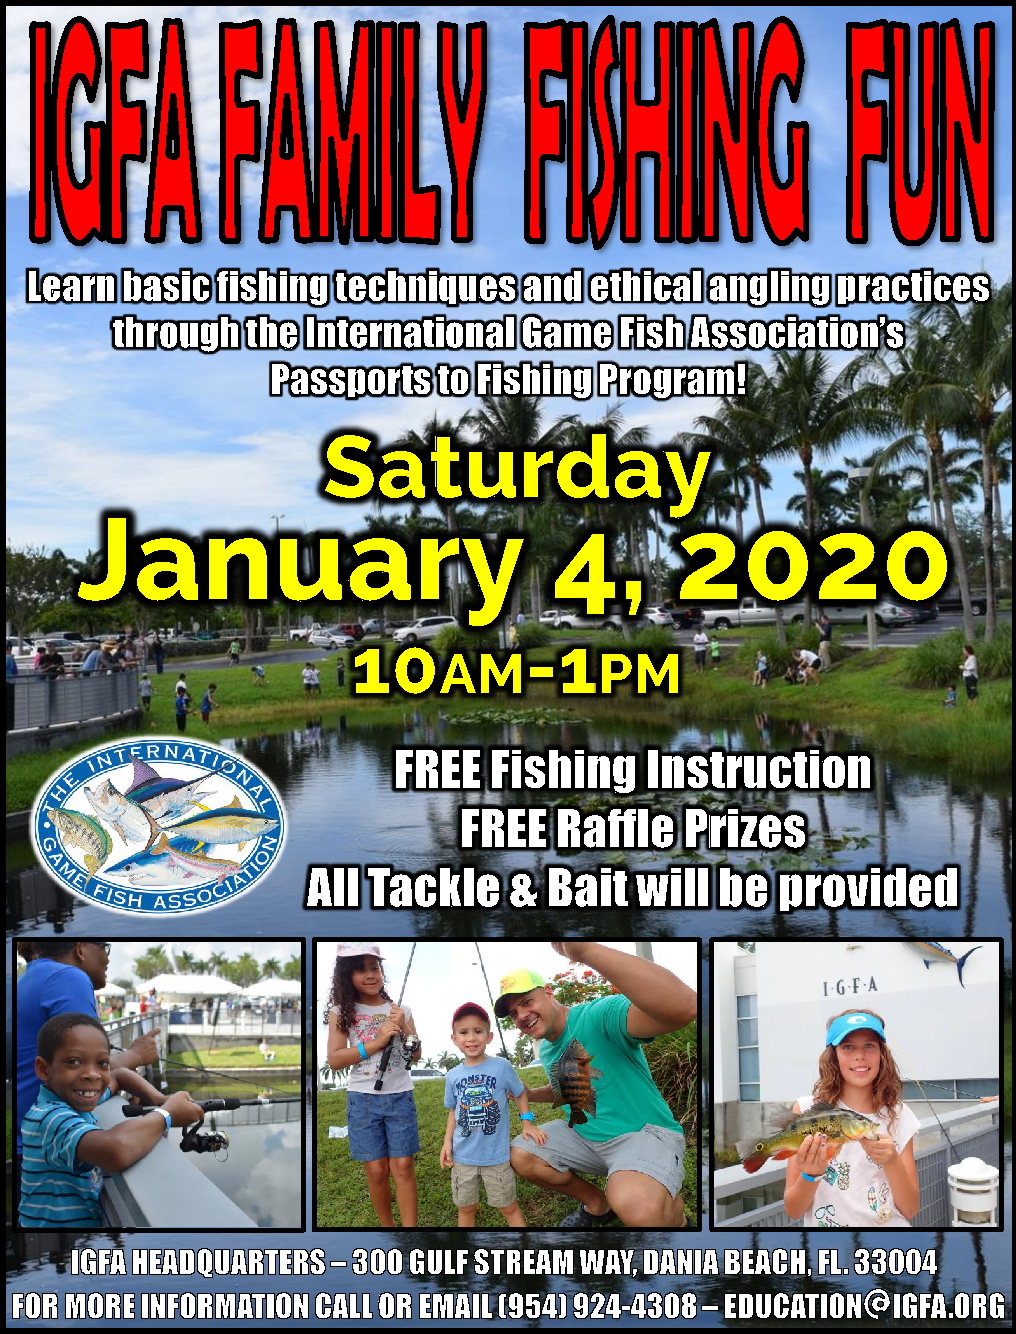 https://igfa.org/wp-content/uploads/2019/12/IGFA-Family-Fishing-Clinic-Flyer-1-4-20-png.png